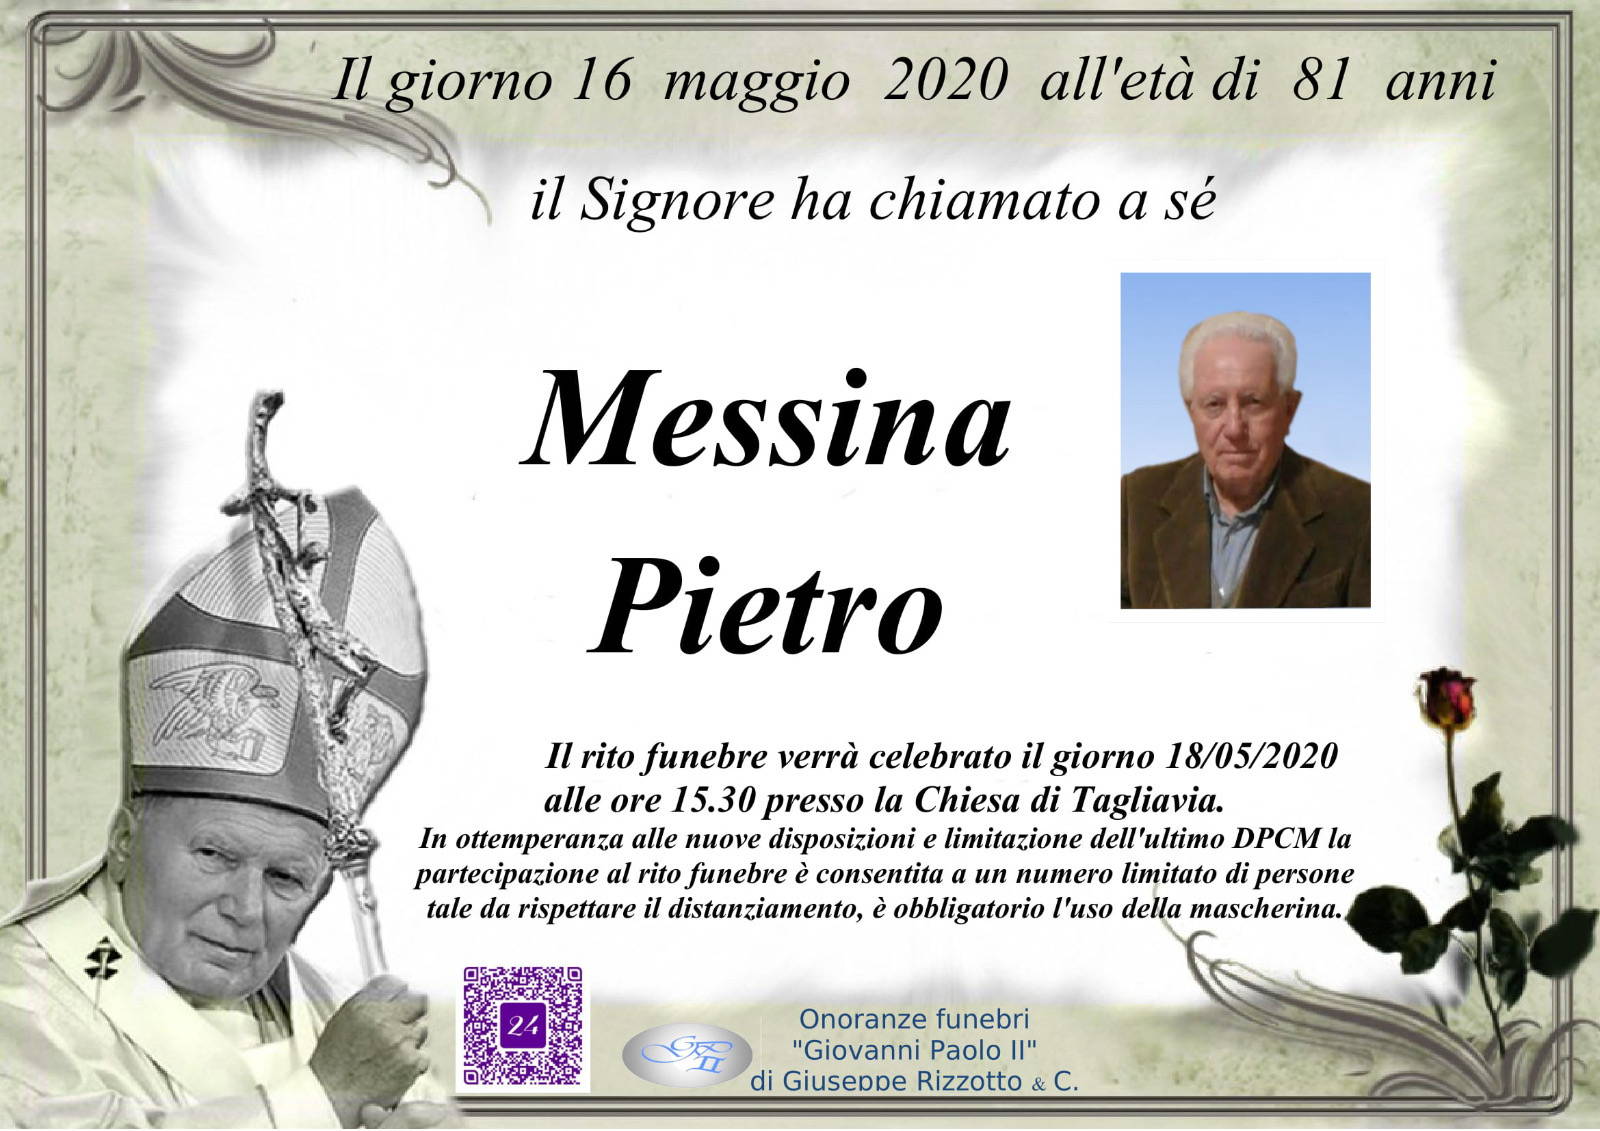 Pietro Messina